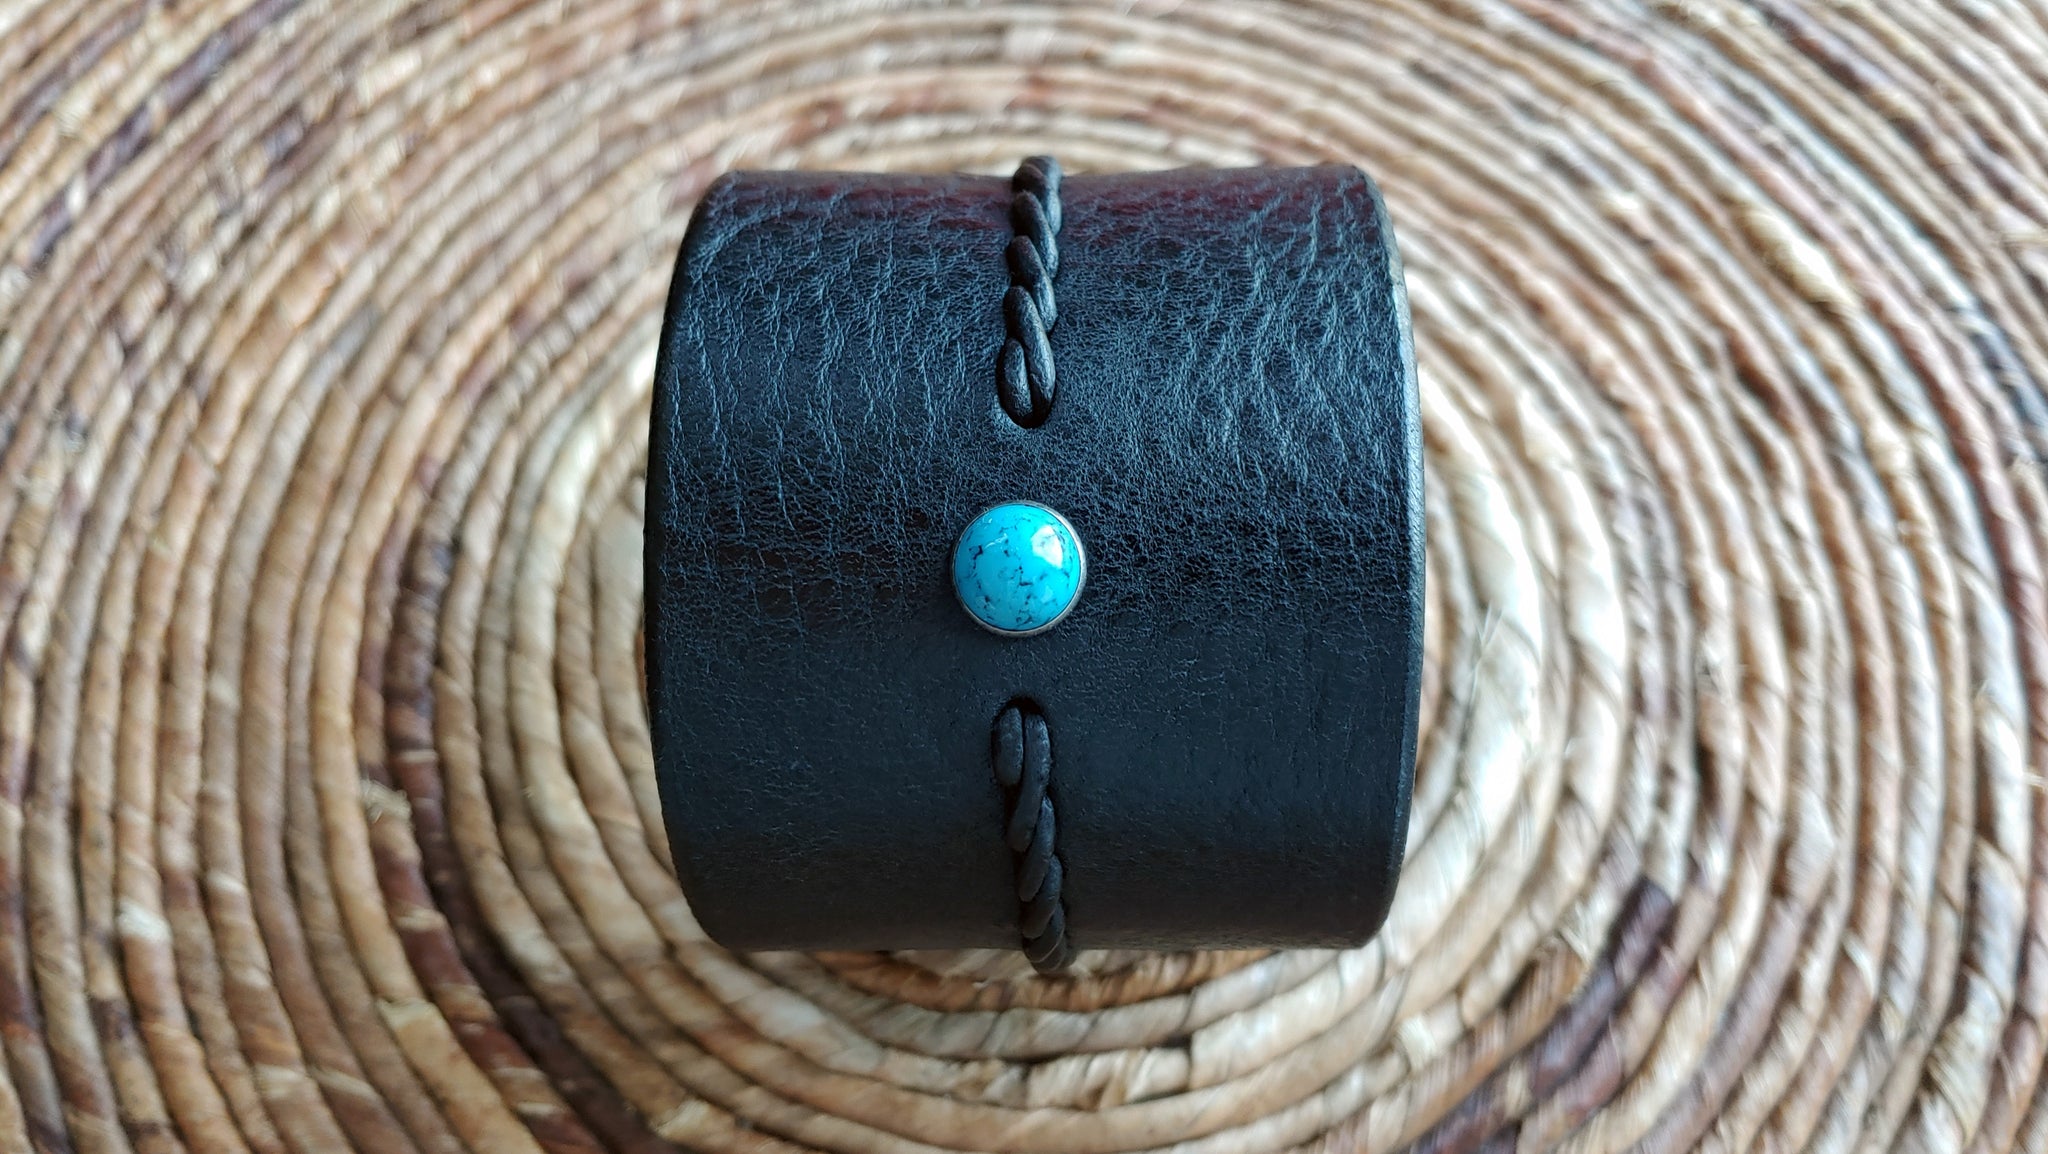 EXTRA WIDE Reyes Turquoise Leather Bracelet | Men's Women's Braided Leather Bracelet  - SS1118-W